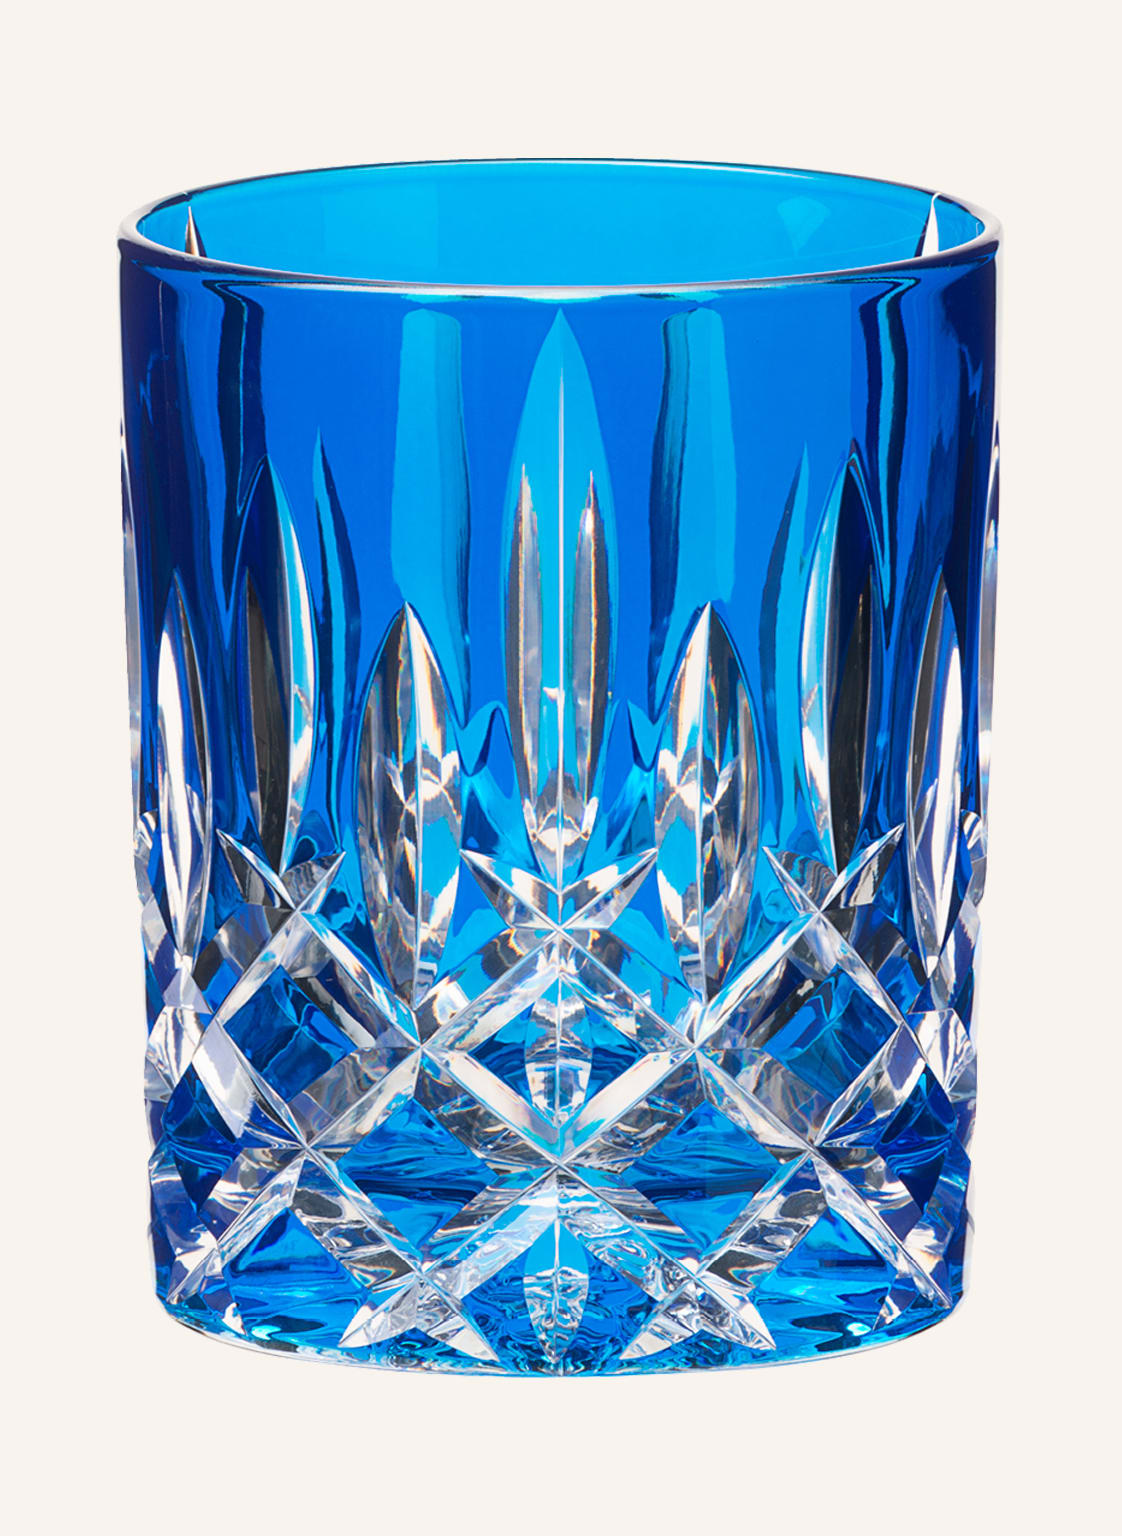 Riedel Whiskyglas Laudon Dunkelblau blau von Riedel